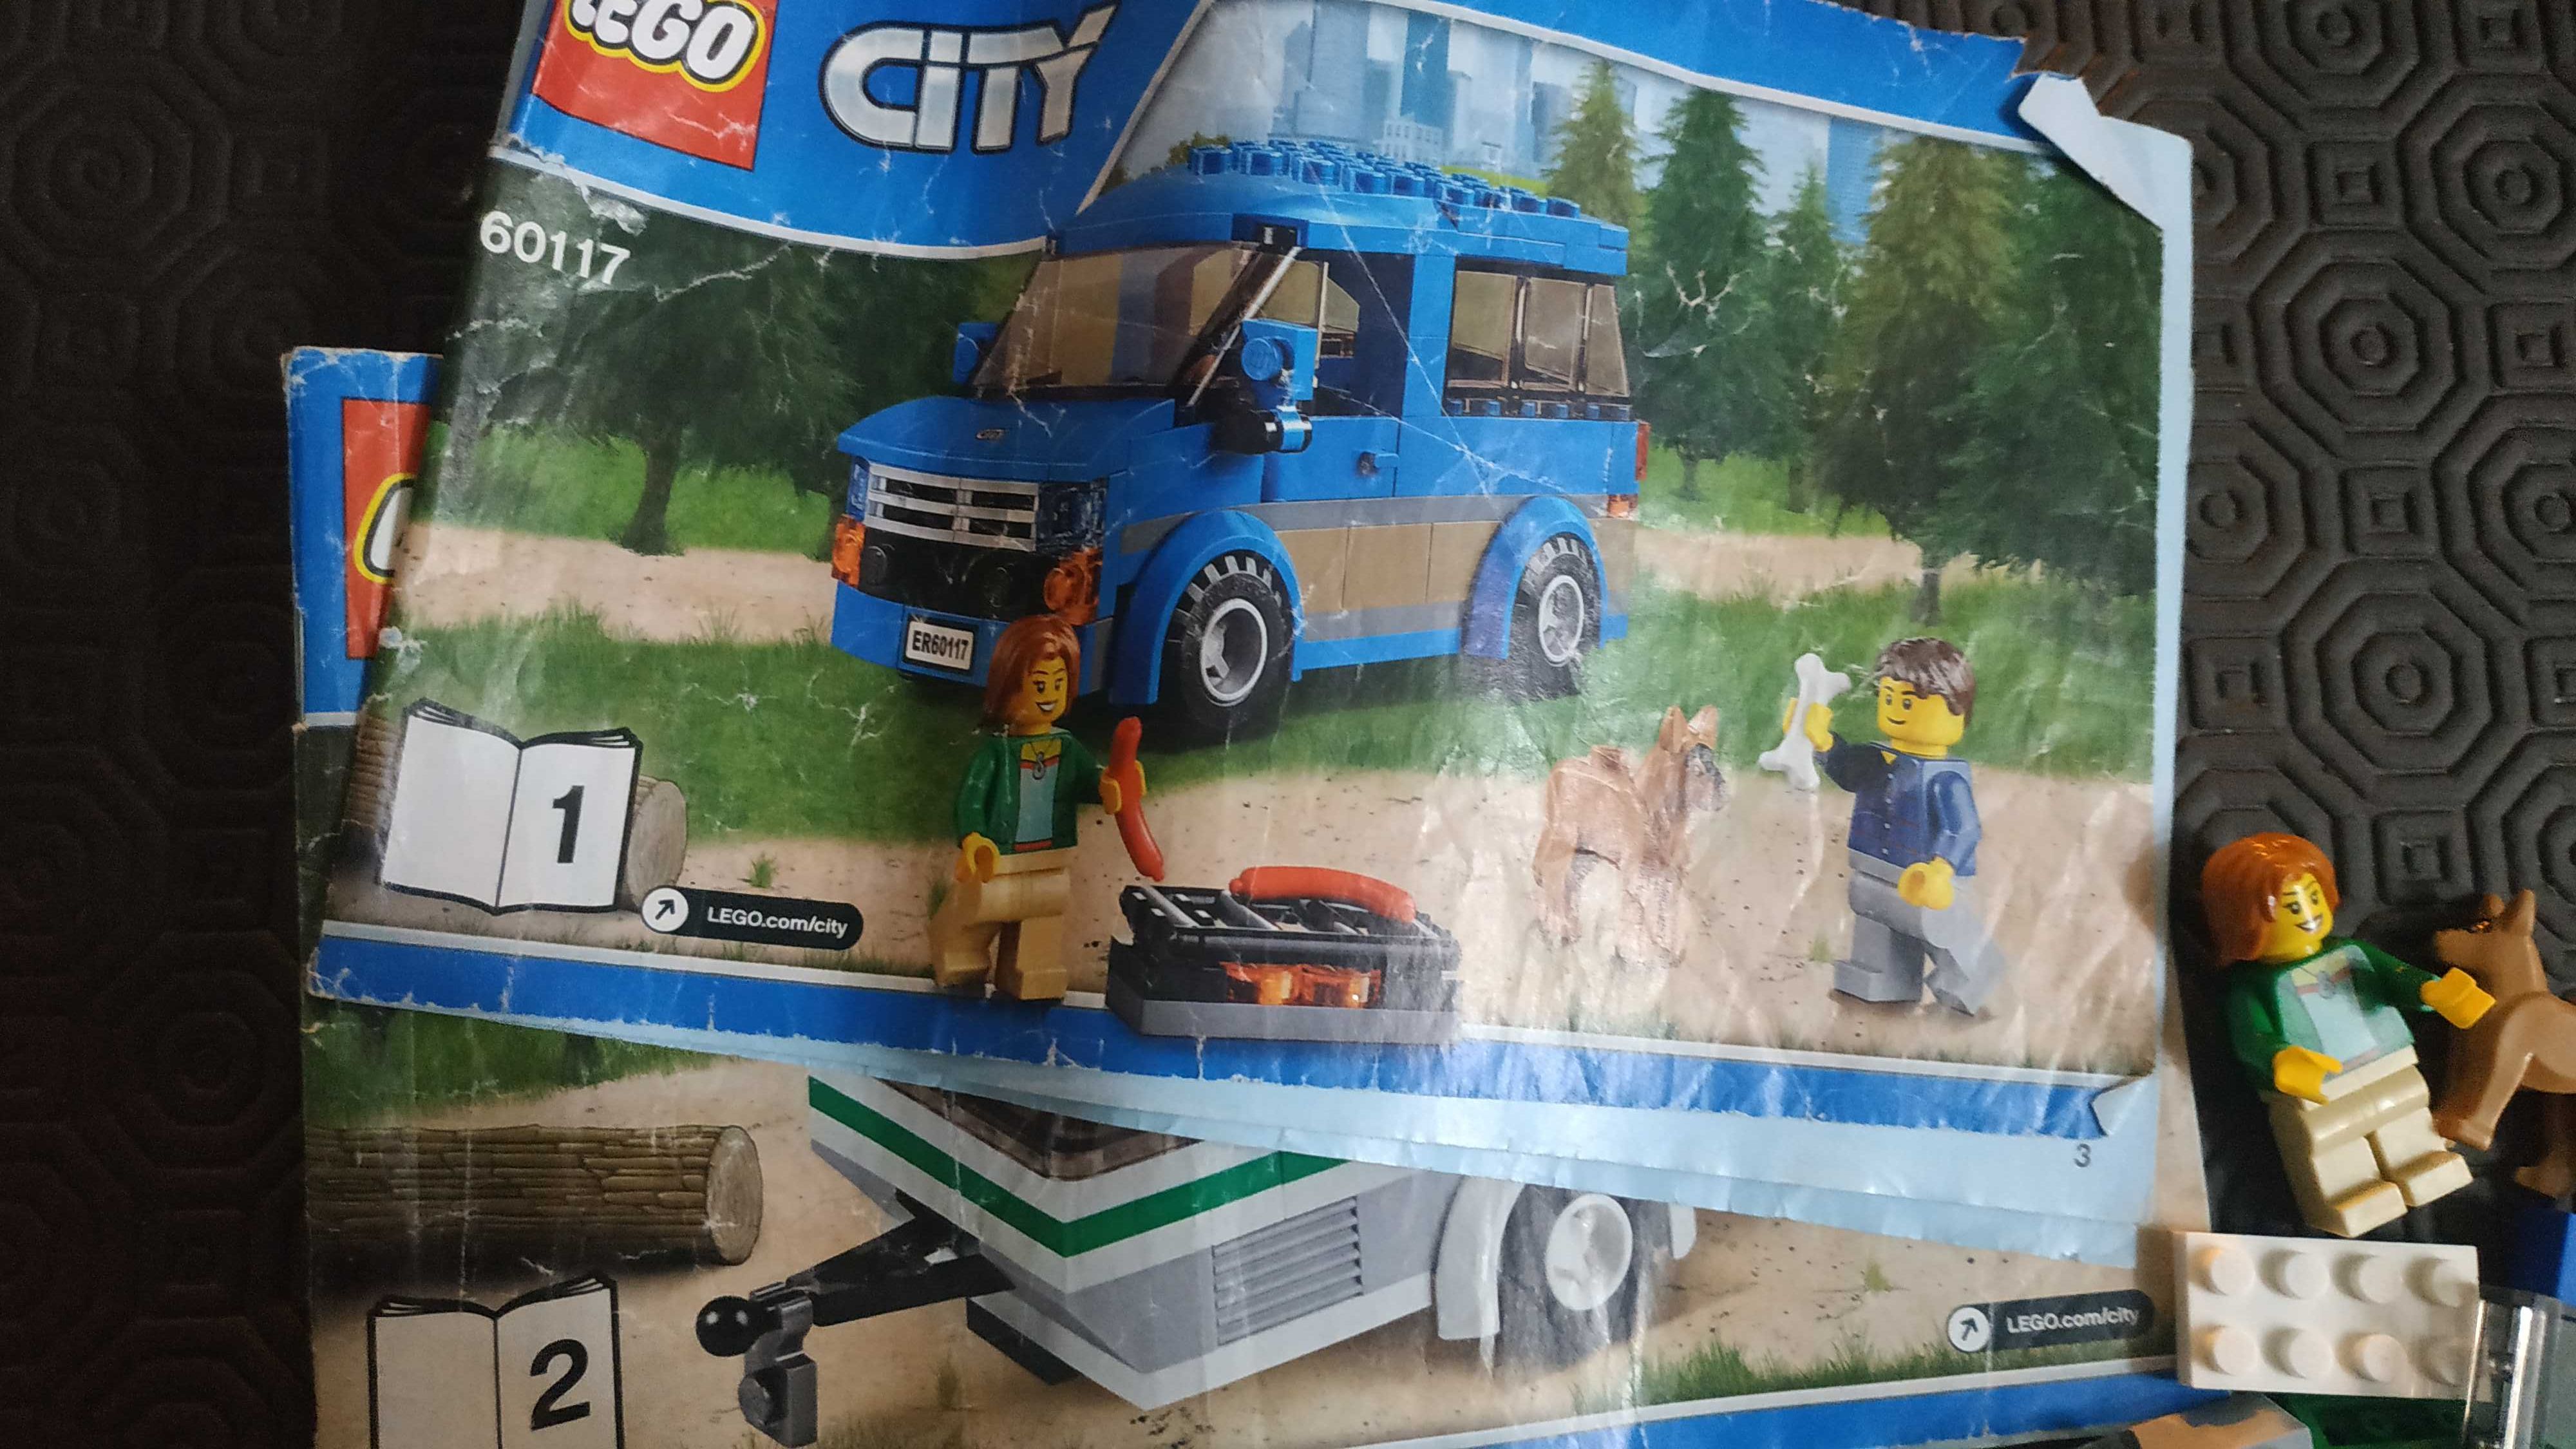 Lego City - Van & Caravana - 60117 - COMPLETO